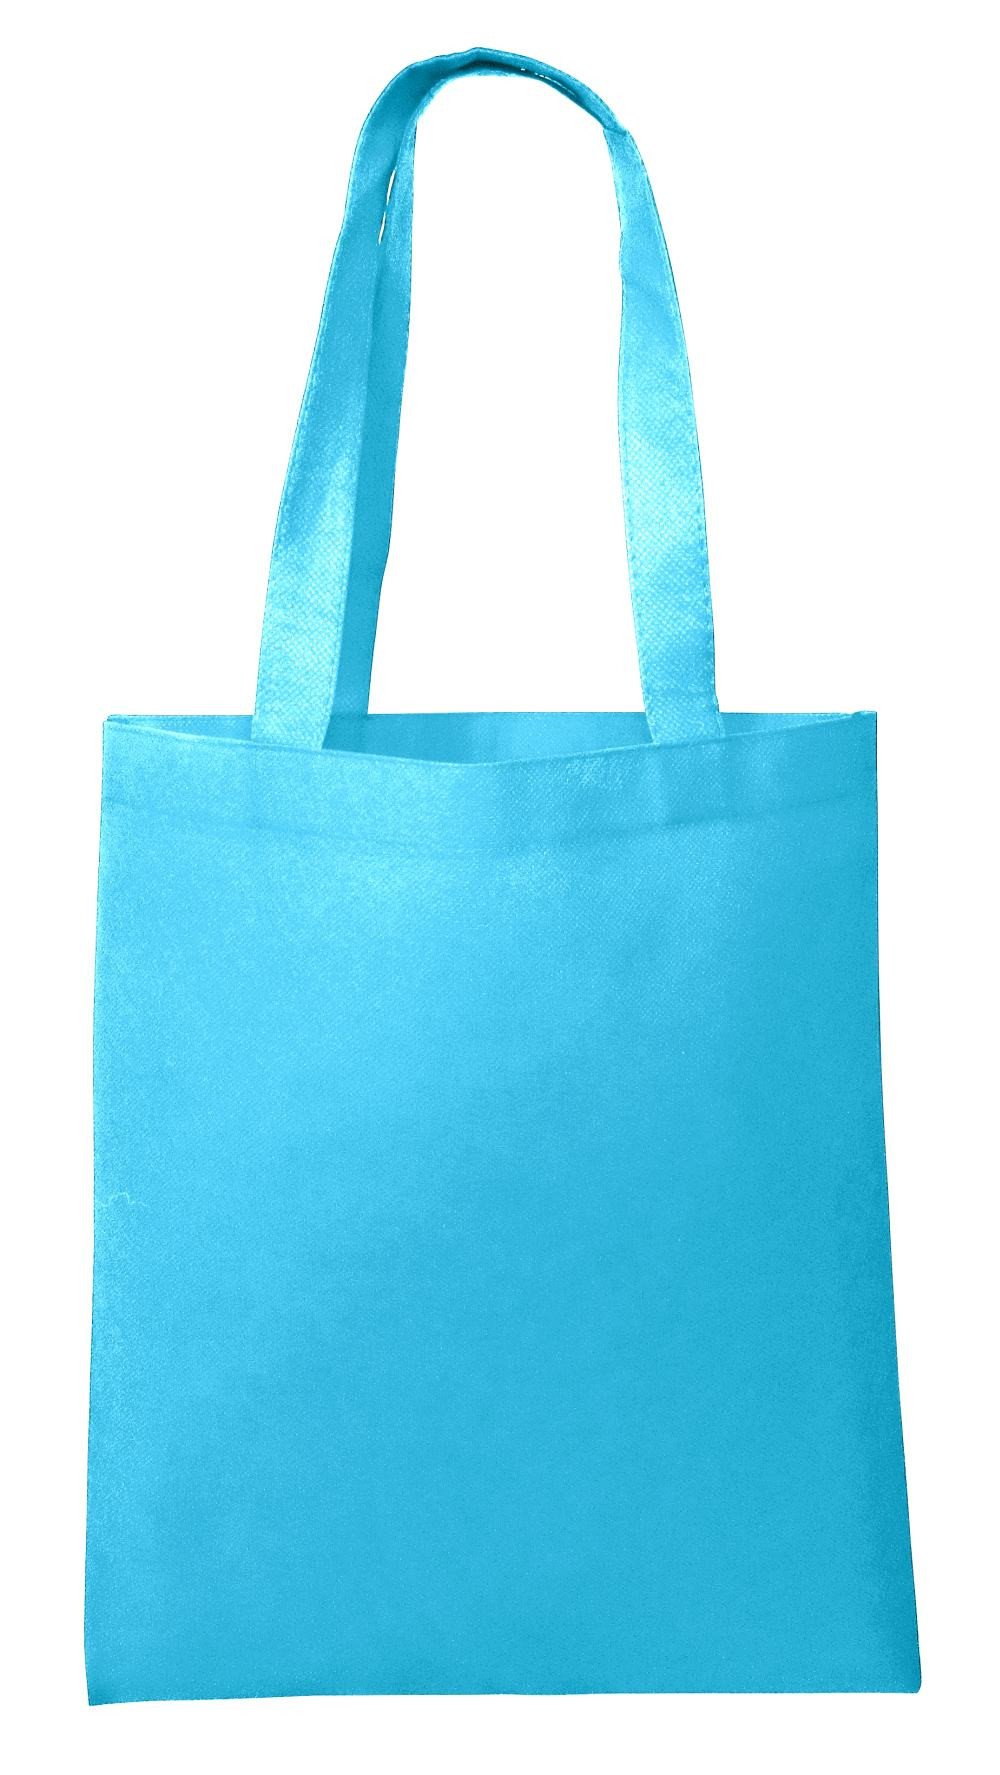 Cheap Promotional Tote Bags aqua